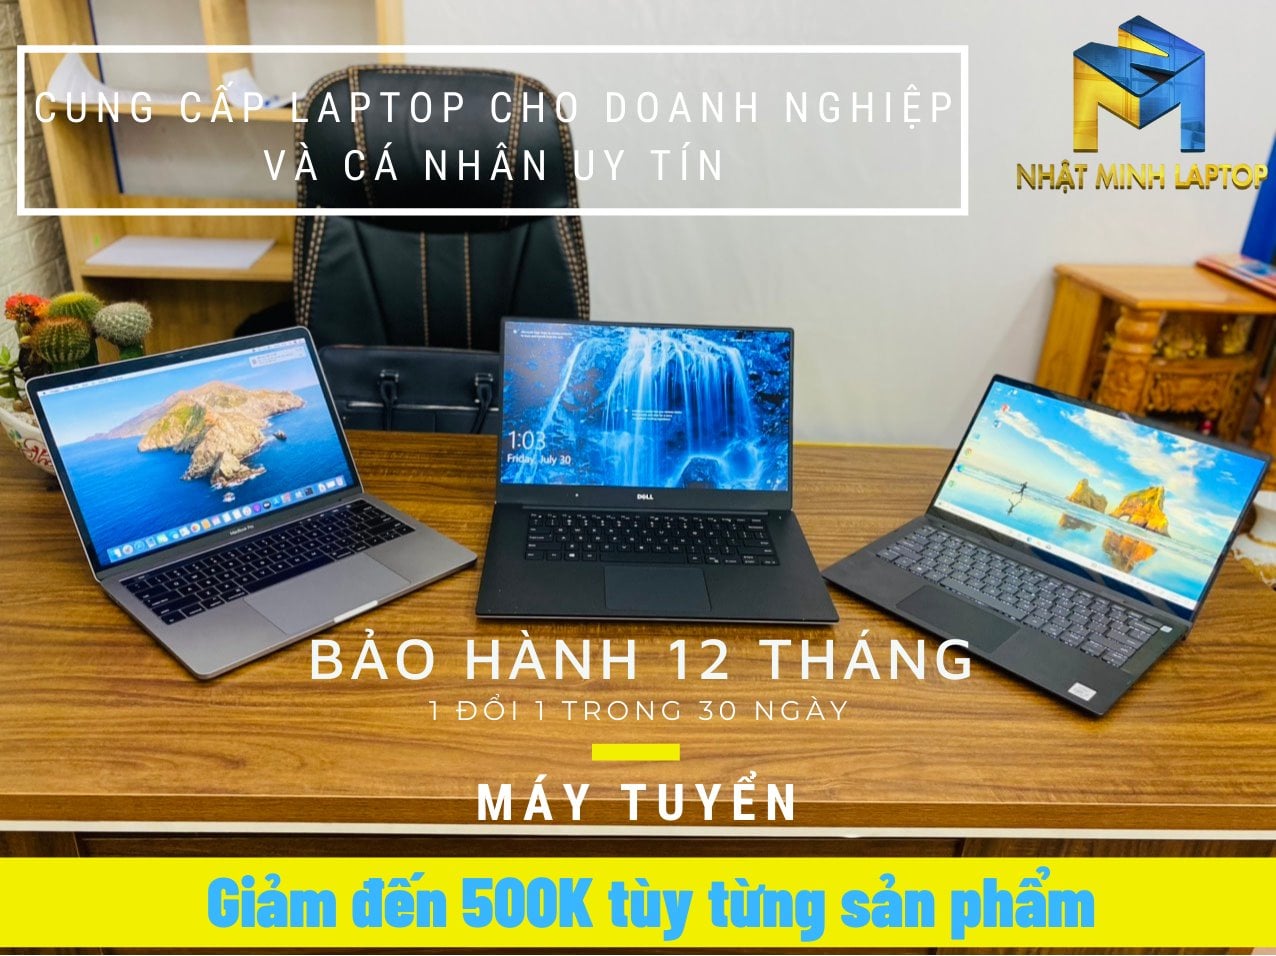 Nhật Minh Laptop - Chuyên Laptop nhập USA